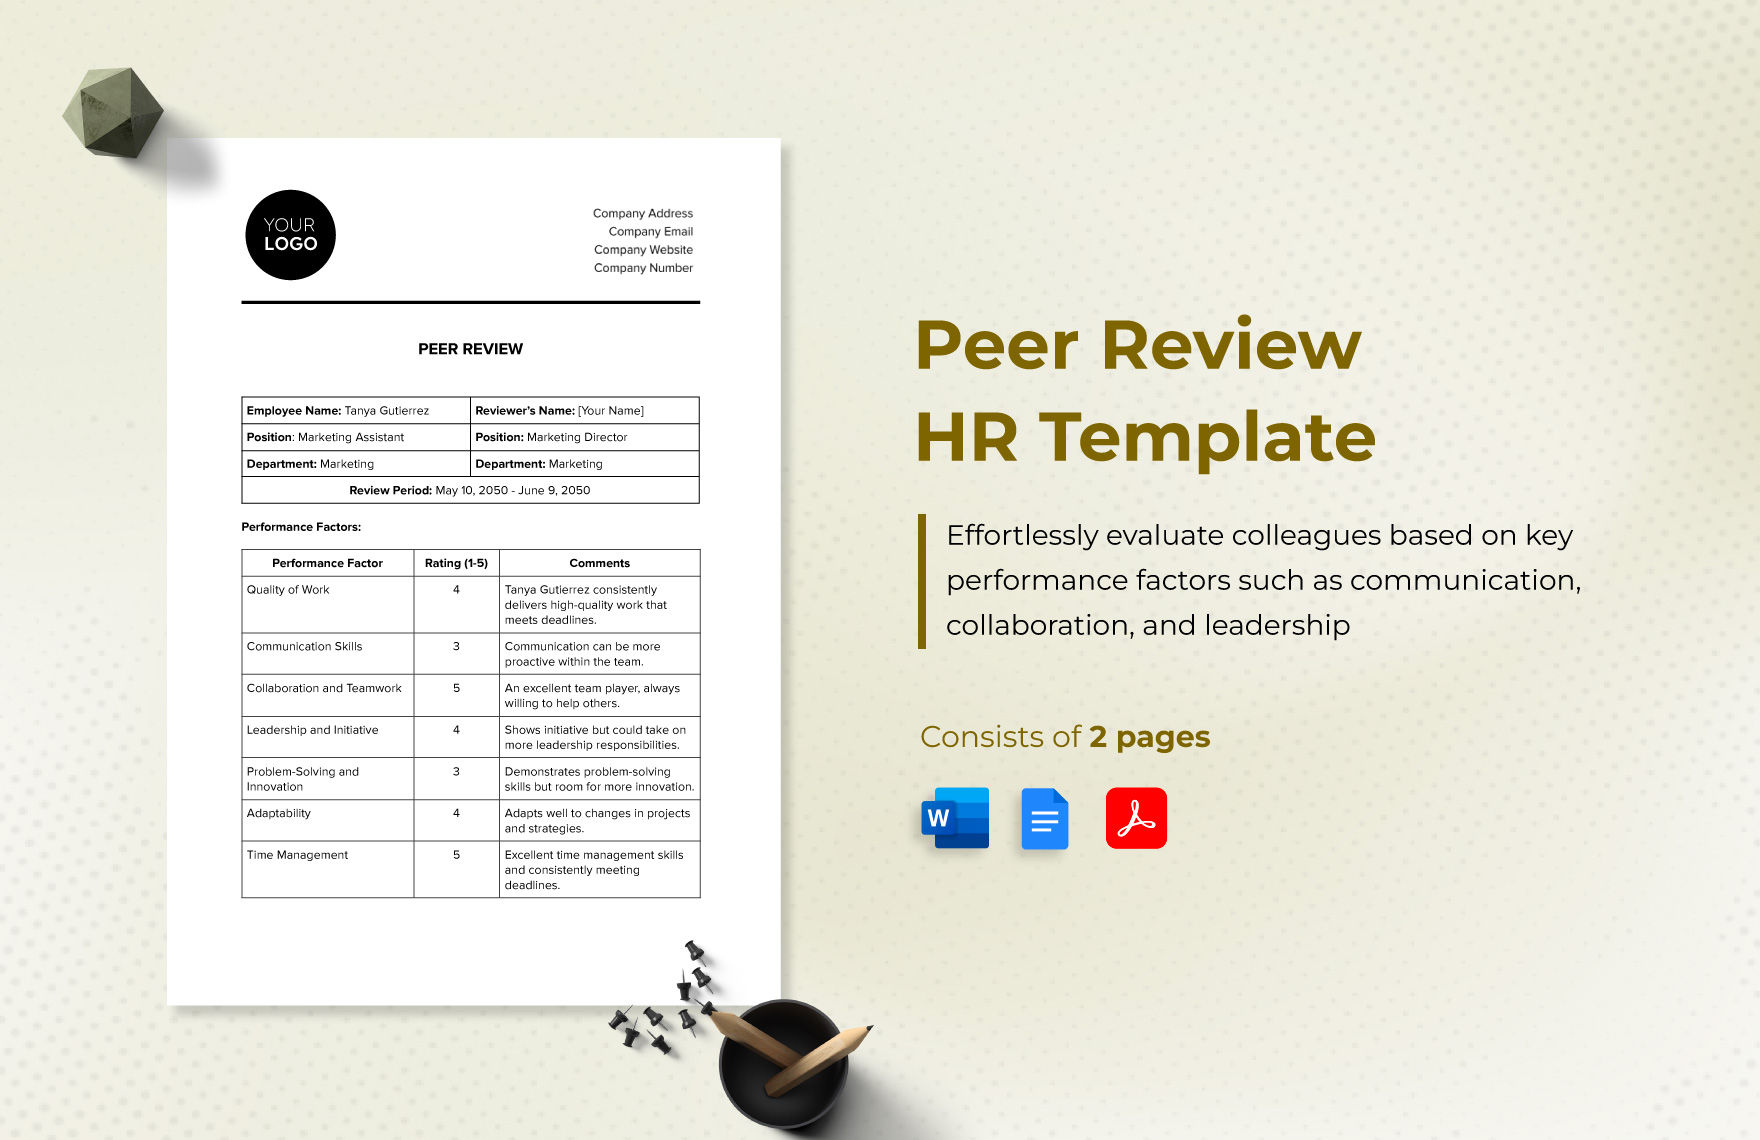 Peer Review HR Template